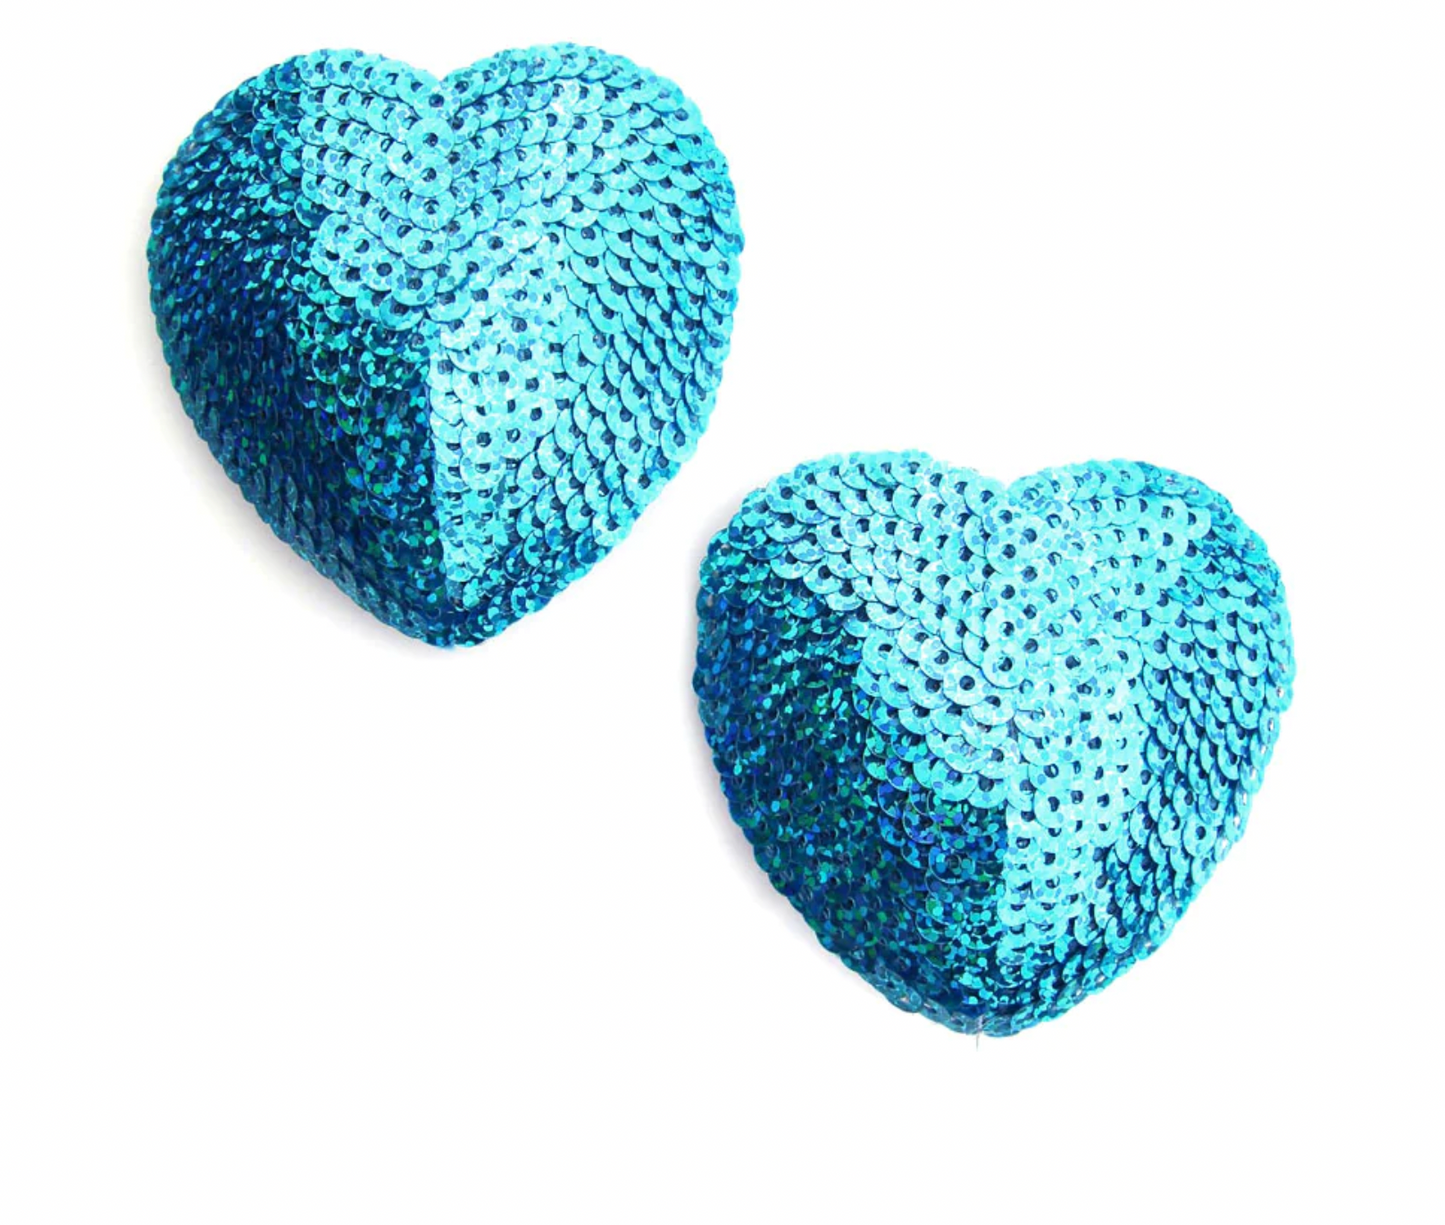 COLOR ME FABULOUS 2 pairs (4 pcs) Heart Pasties, Nipple Covers